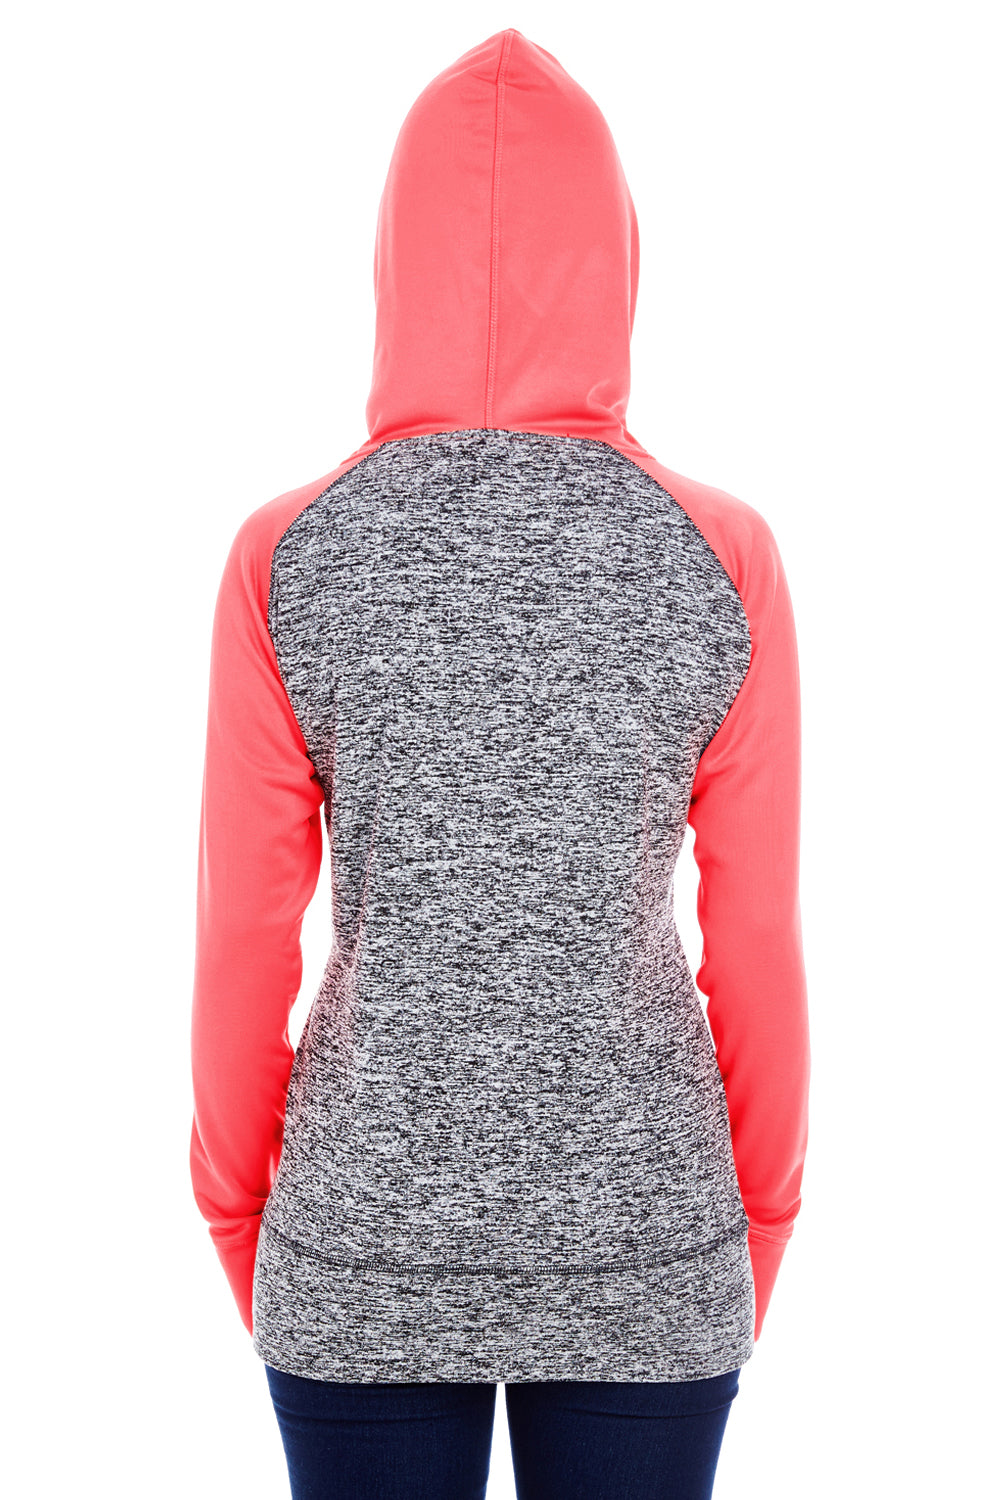 J America JA8618 Womens Cosmic Fleece Hooded Sweatshirt Hoodie Charcoal Grey/Coral Pink Back